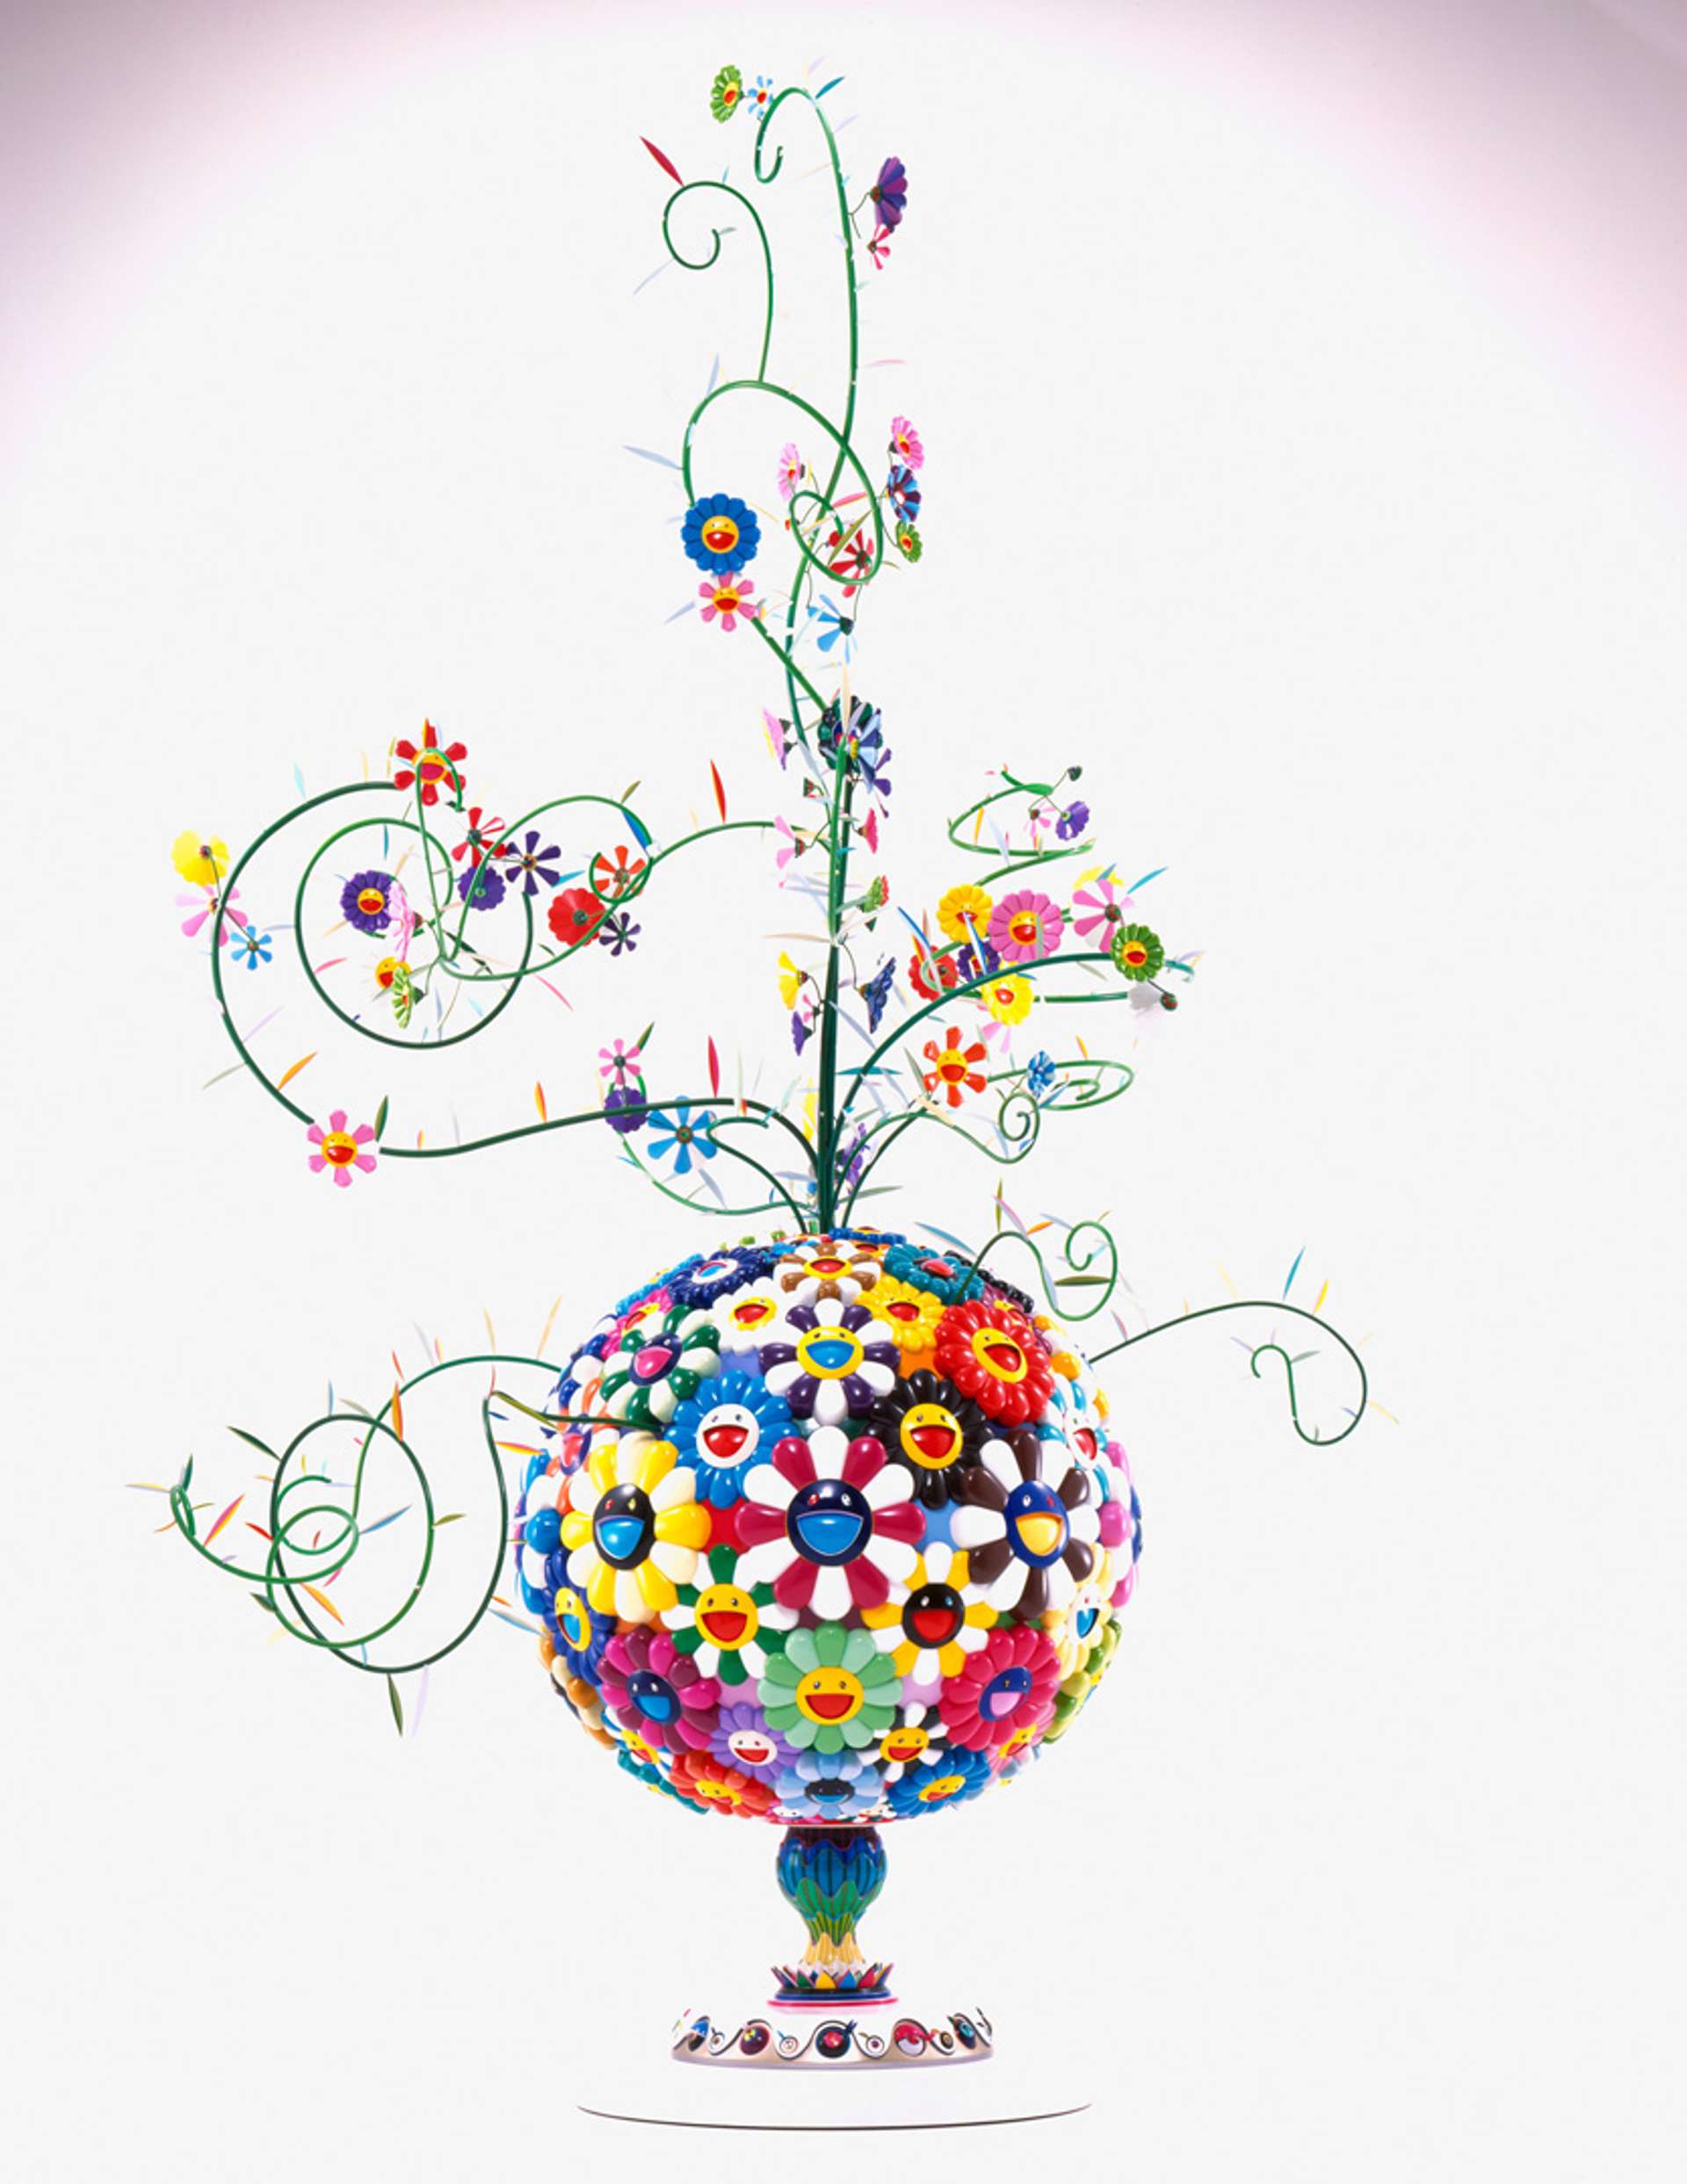 Takashi Murkami’s Flower Matango (b). A multicoloured fibreglass sculpture of flowers with smiling faces.